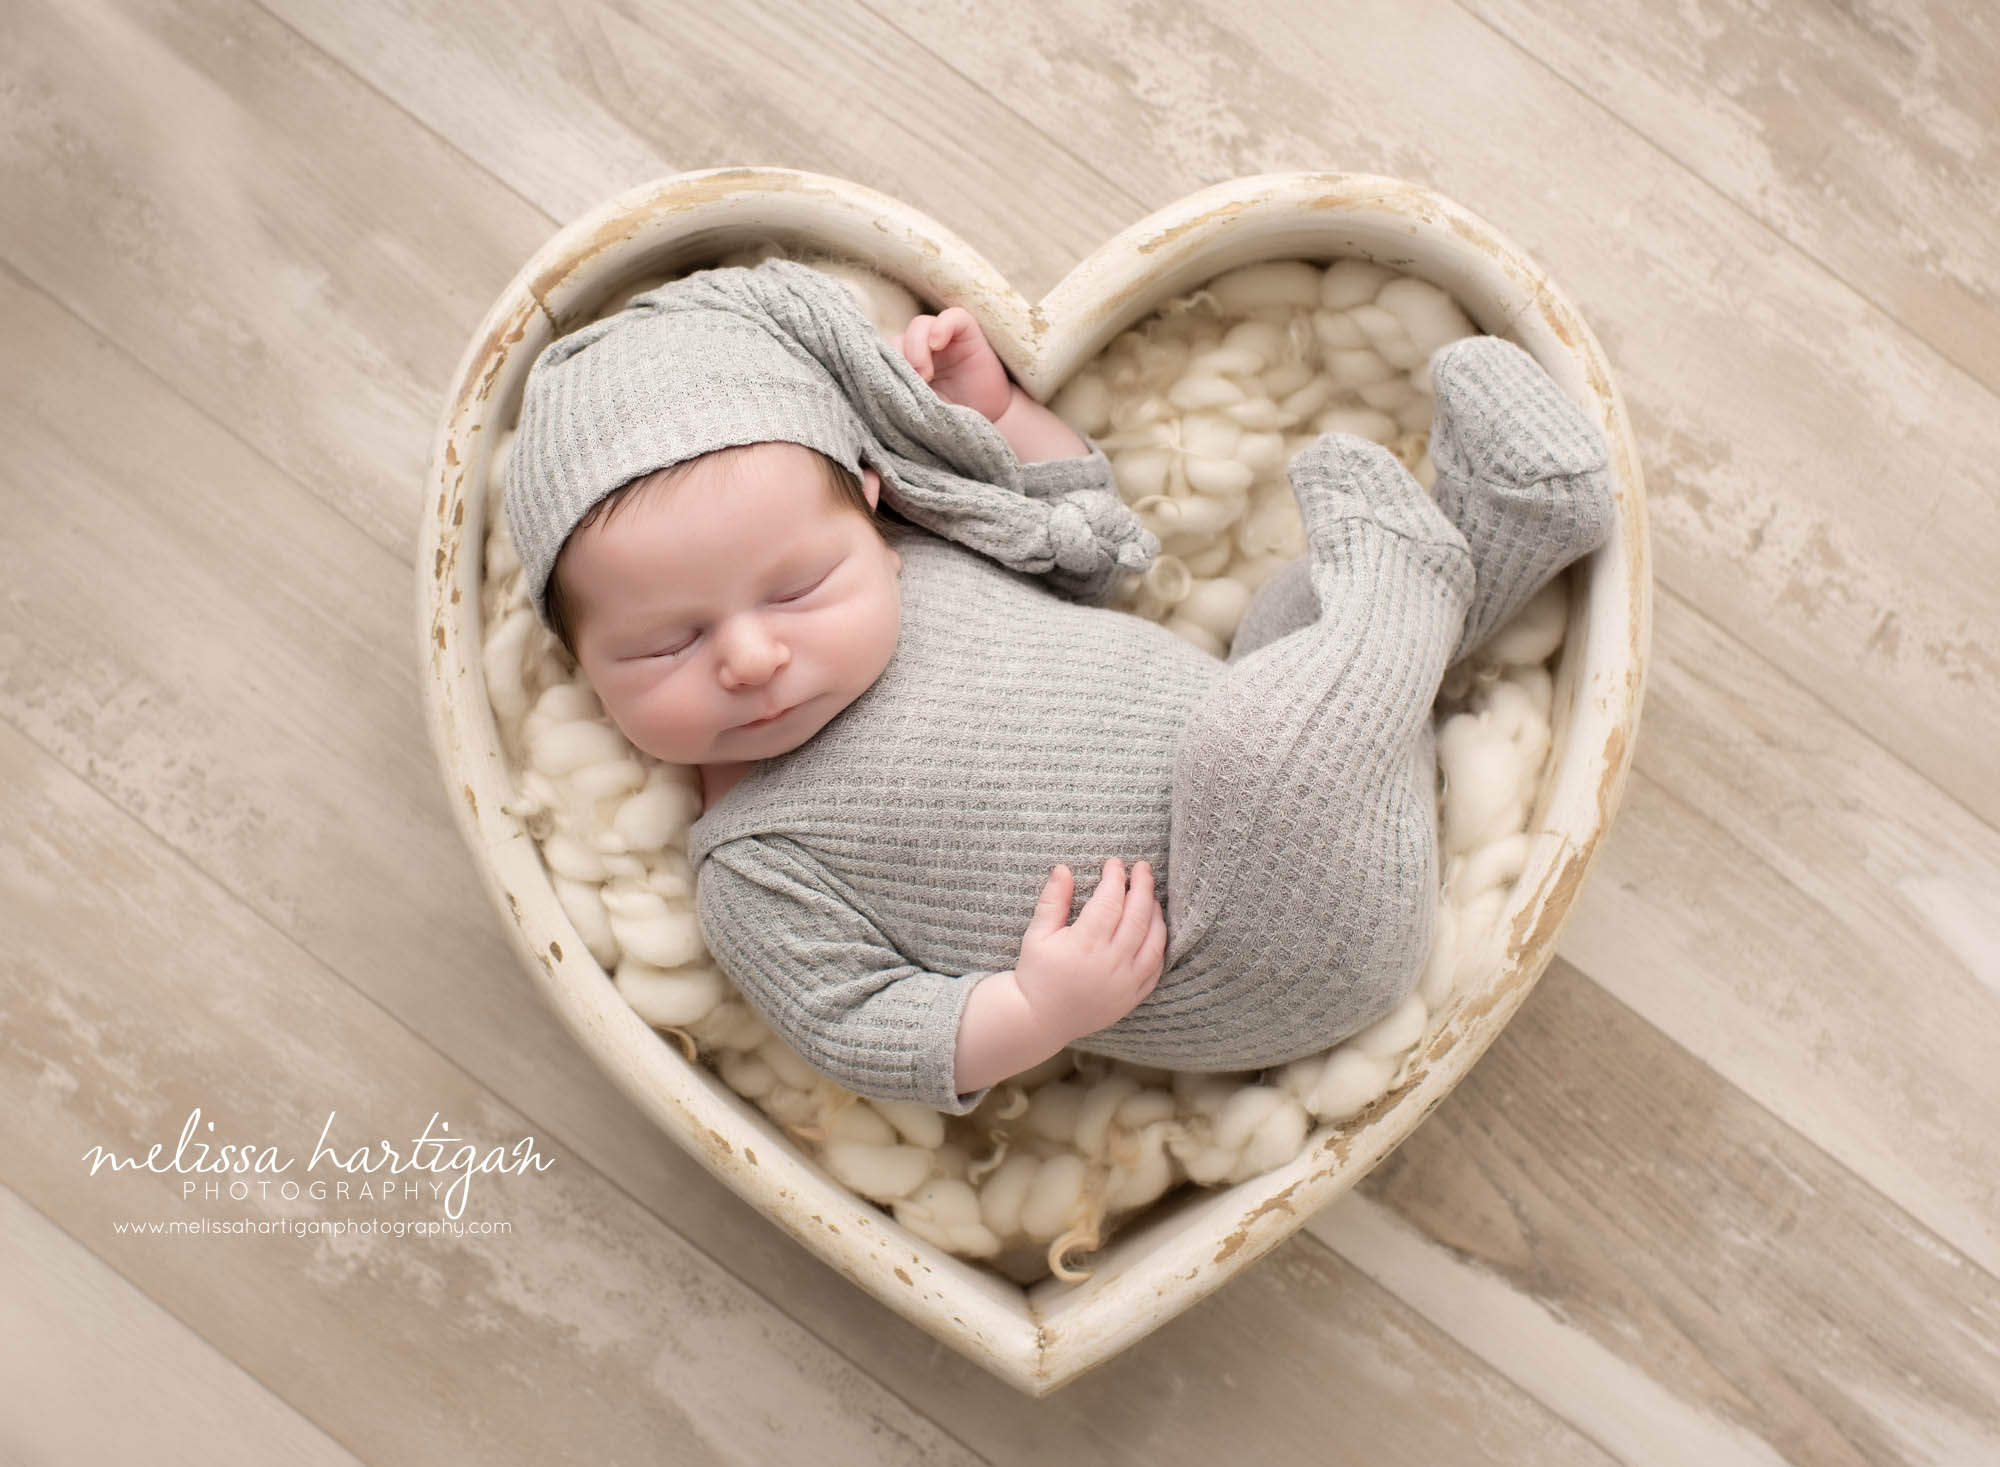 baby boy wearing grey footed sleeper with sleepy cap posed in wooden heart prop Ellington CT newborn photography